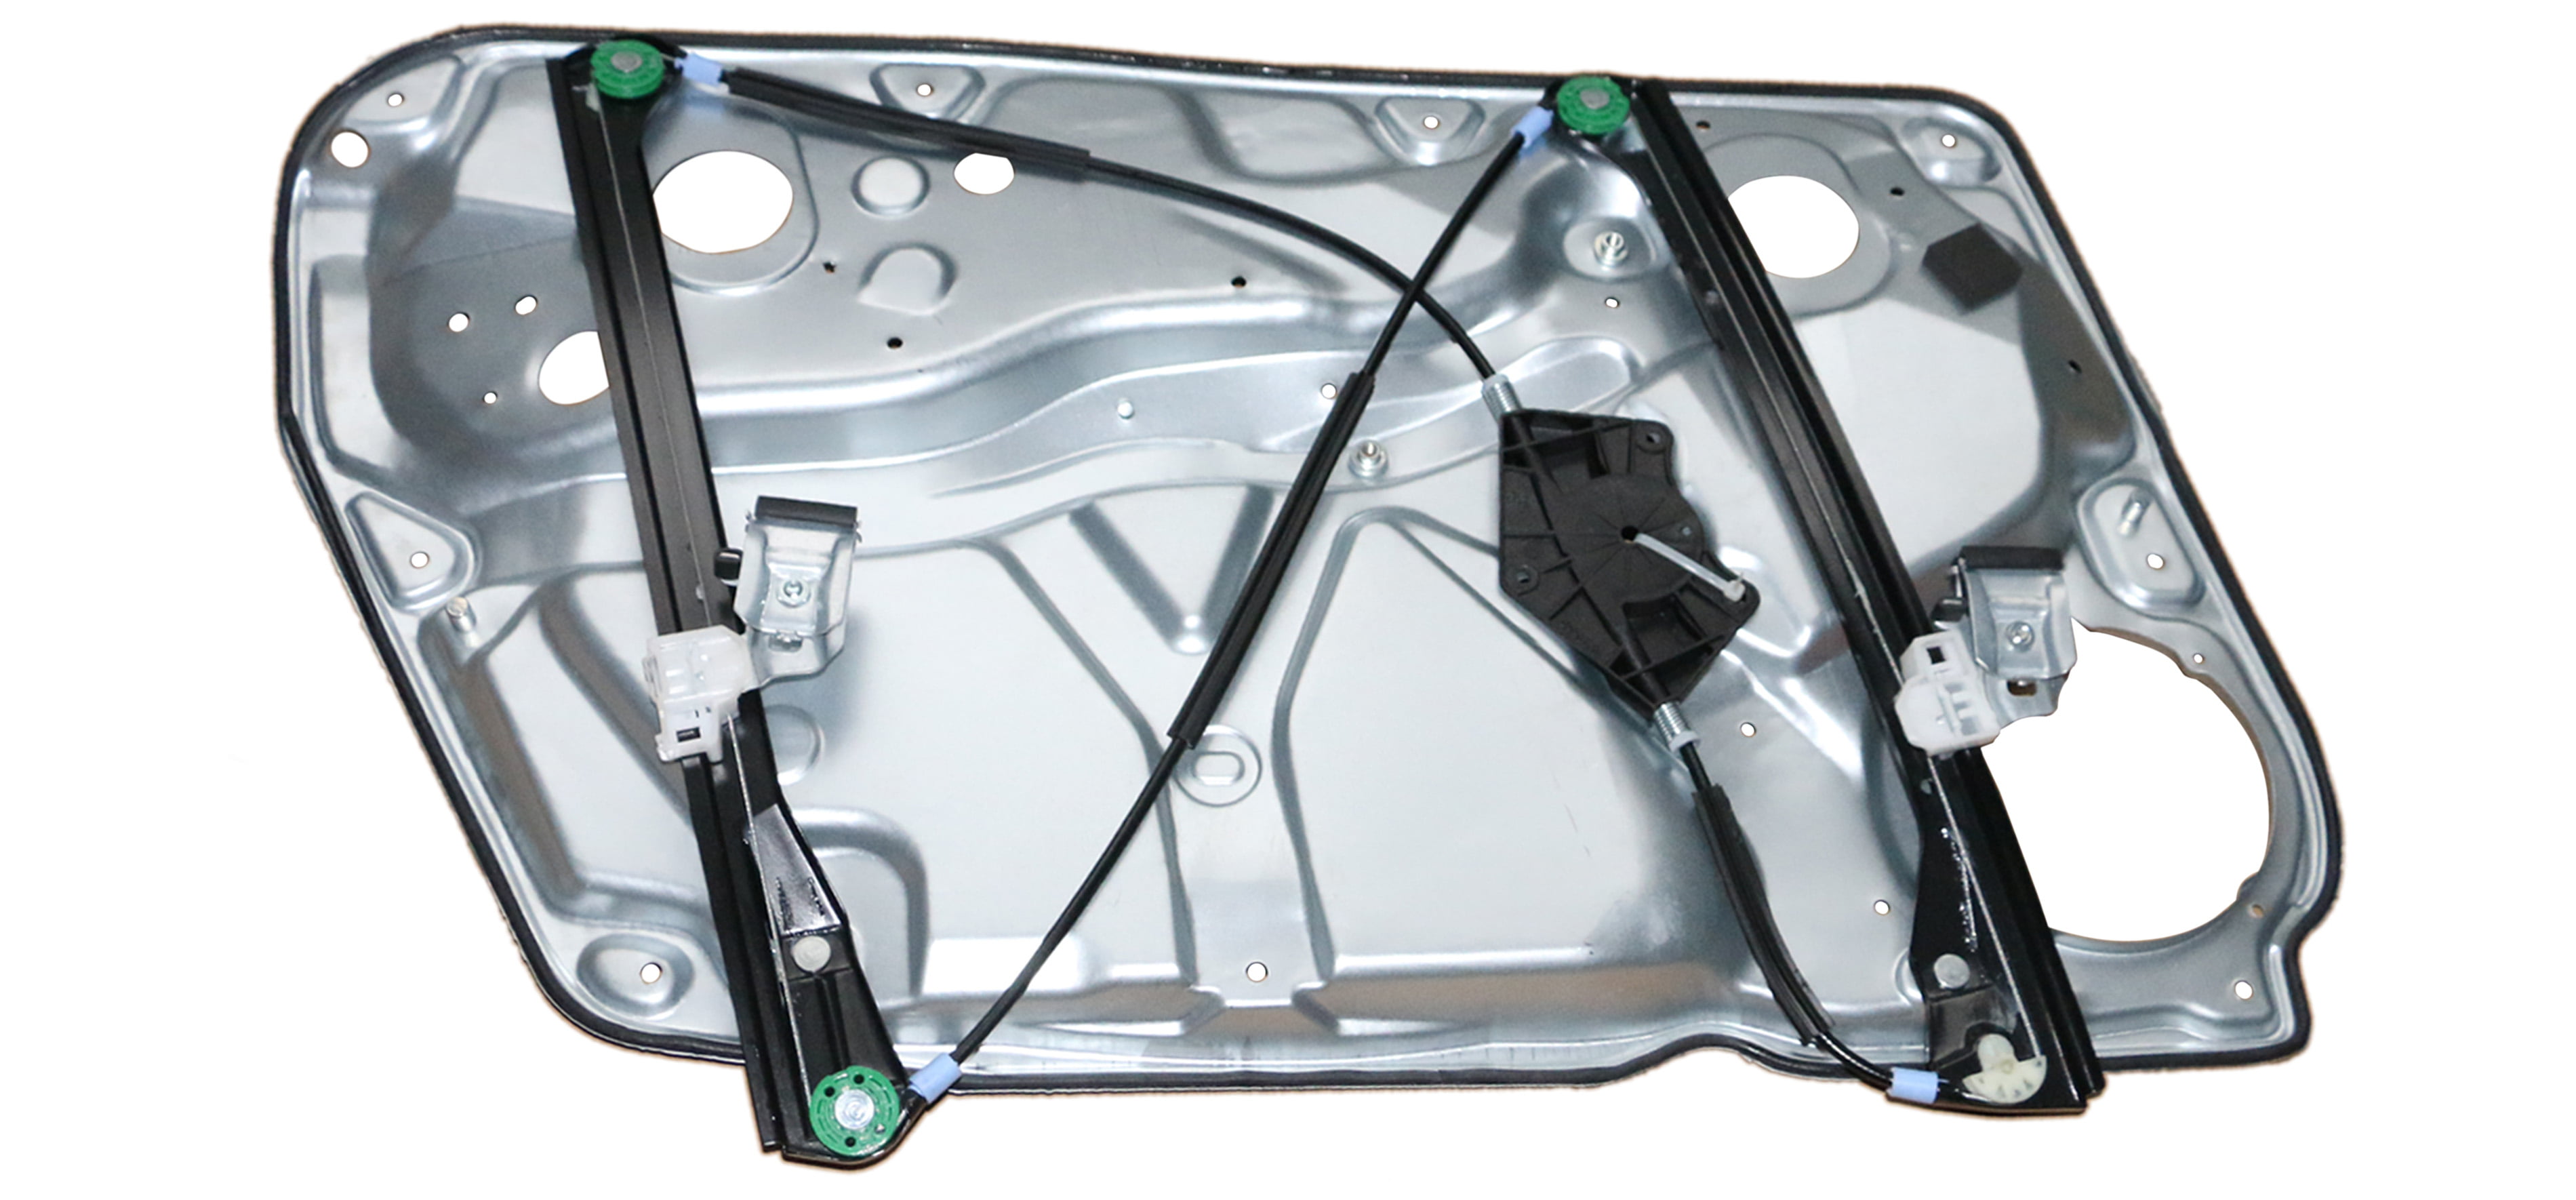 Driver and Passenger Front Manual Window Lift Regulators Assemblies Replacement for Nissan D21 Pickup Truck Pathfinder 807013B300 807003B300 